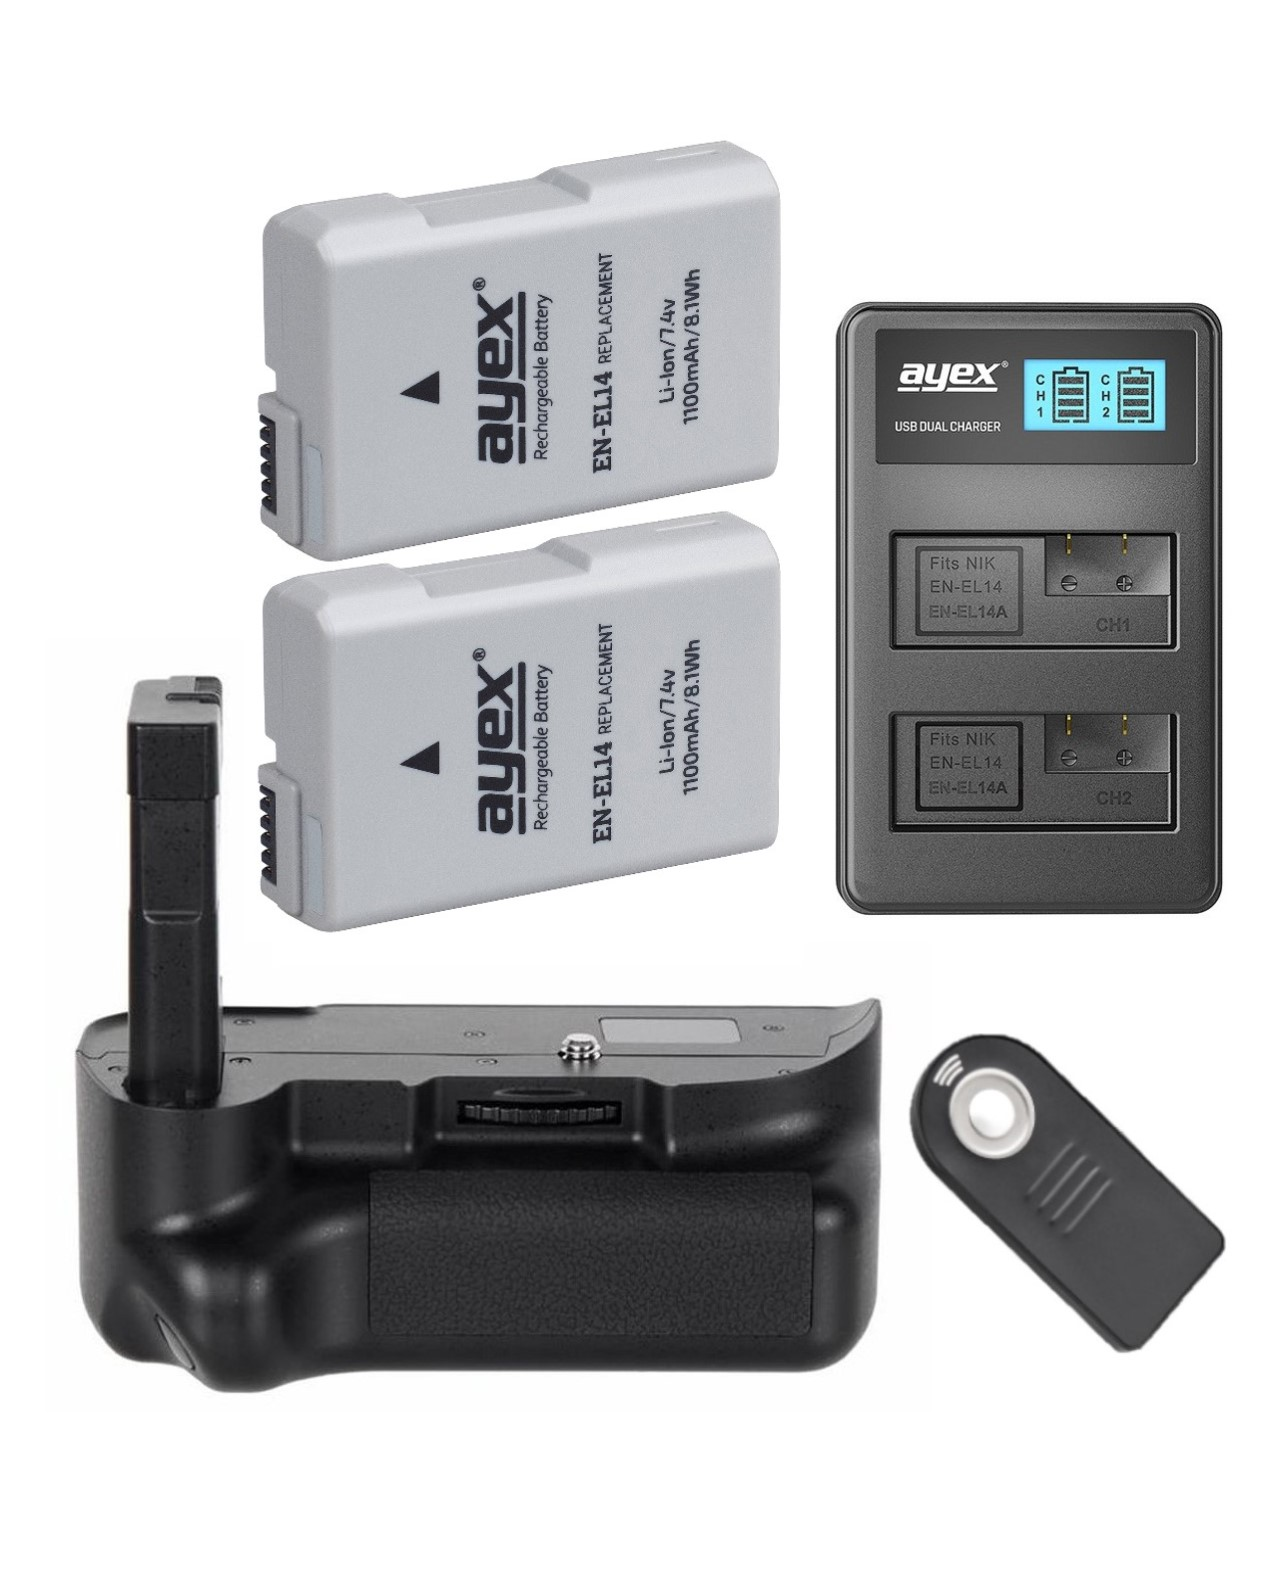 Ladegerät, Dual D5100 2x AYEX 1x Batteriegriff-Set, EN-EL14 + D5200 + + Nikon Akkugriff Black IR-Fernauslöser für USB Akku